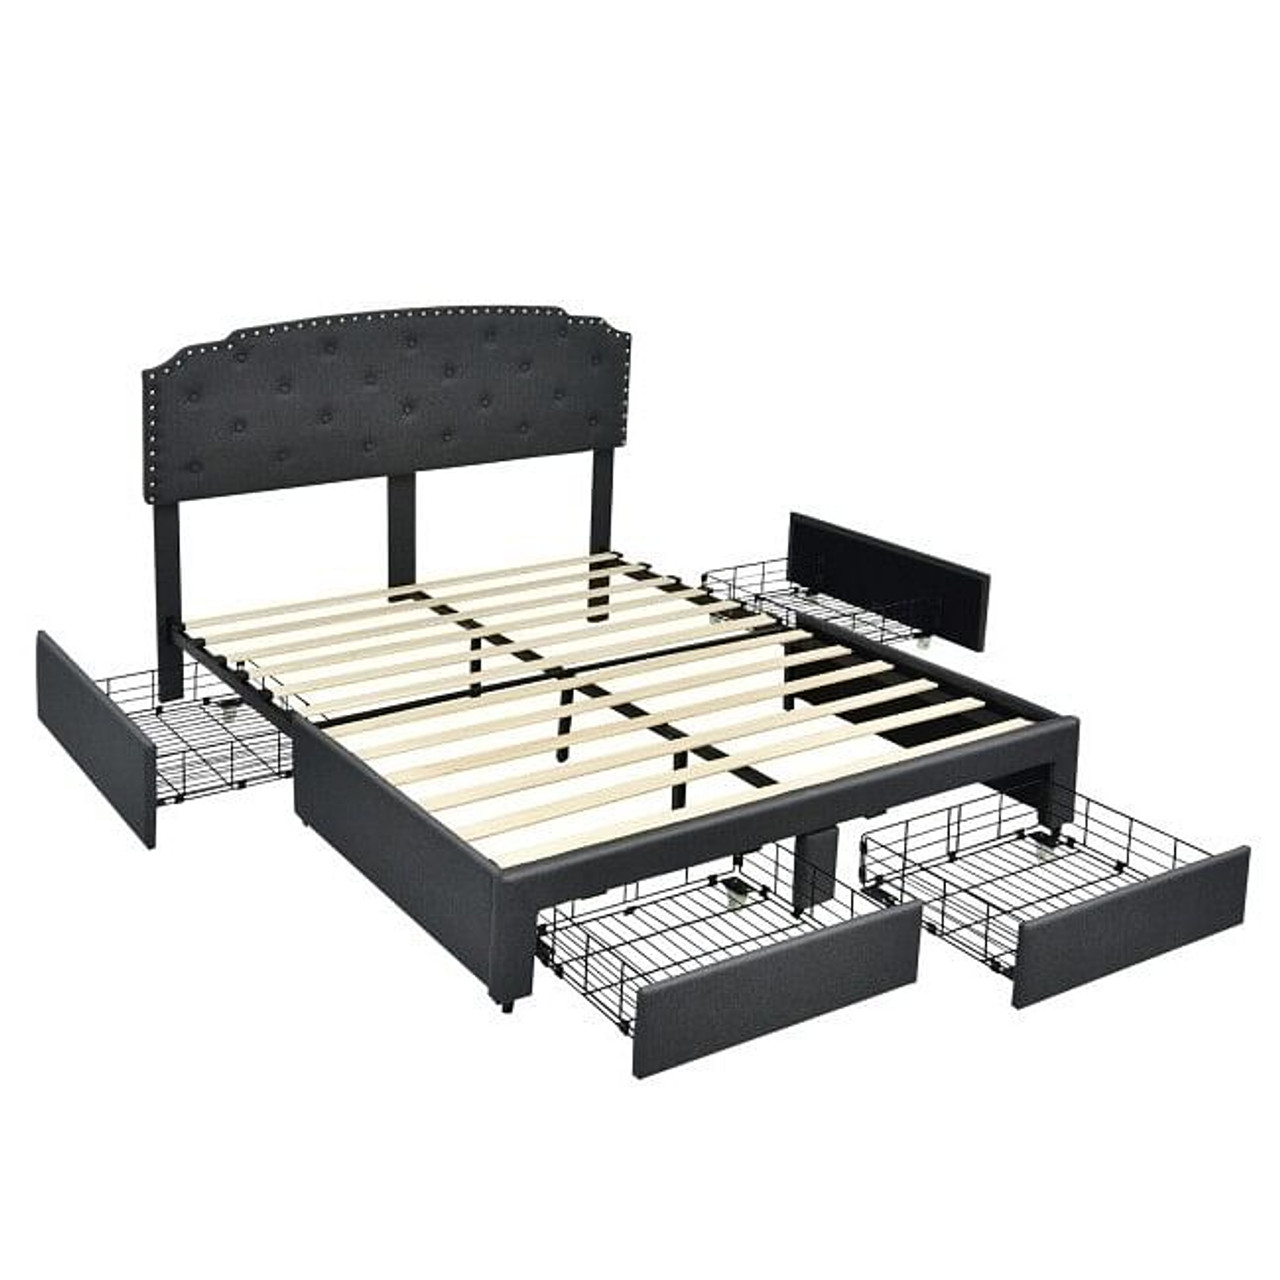 Full Size Grey Linen Adjustable Headboard 4 Drawer Storage Platform Bed